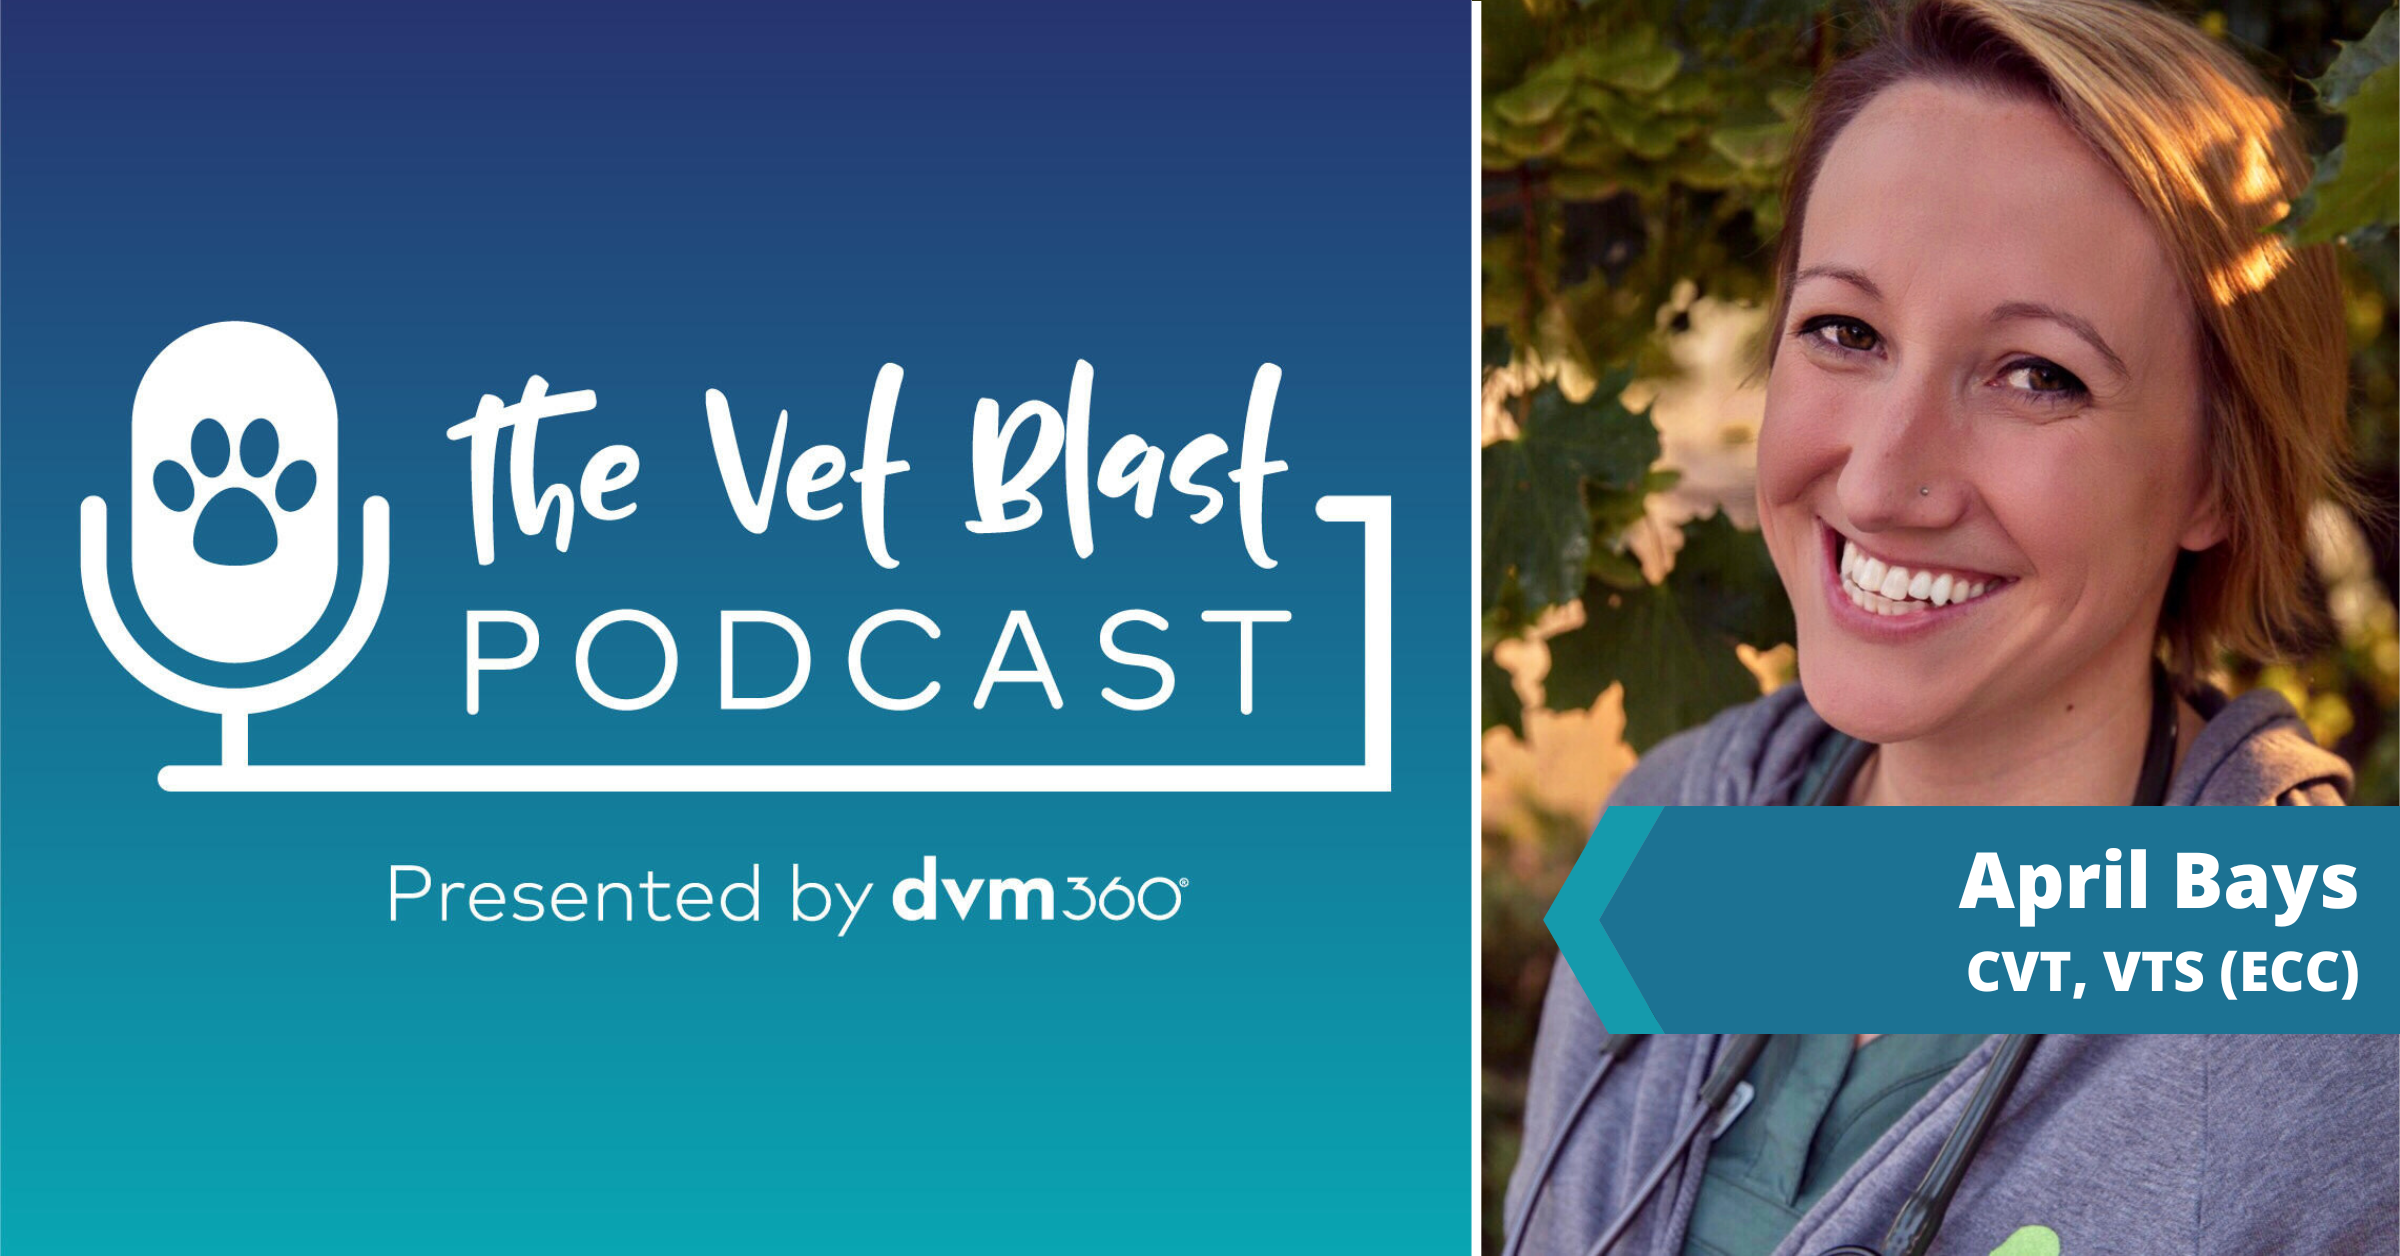 The Vet Blast Podcast with April Bays